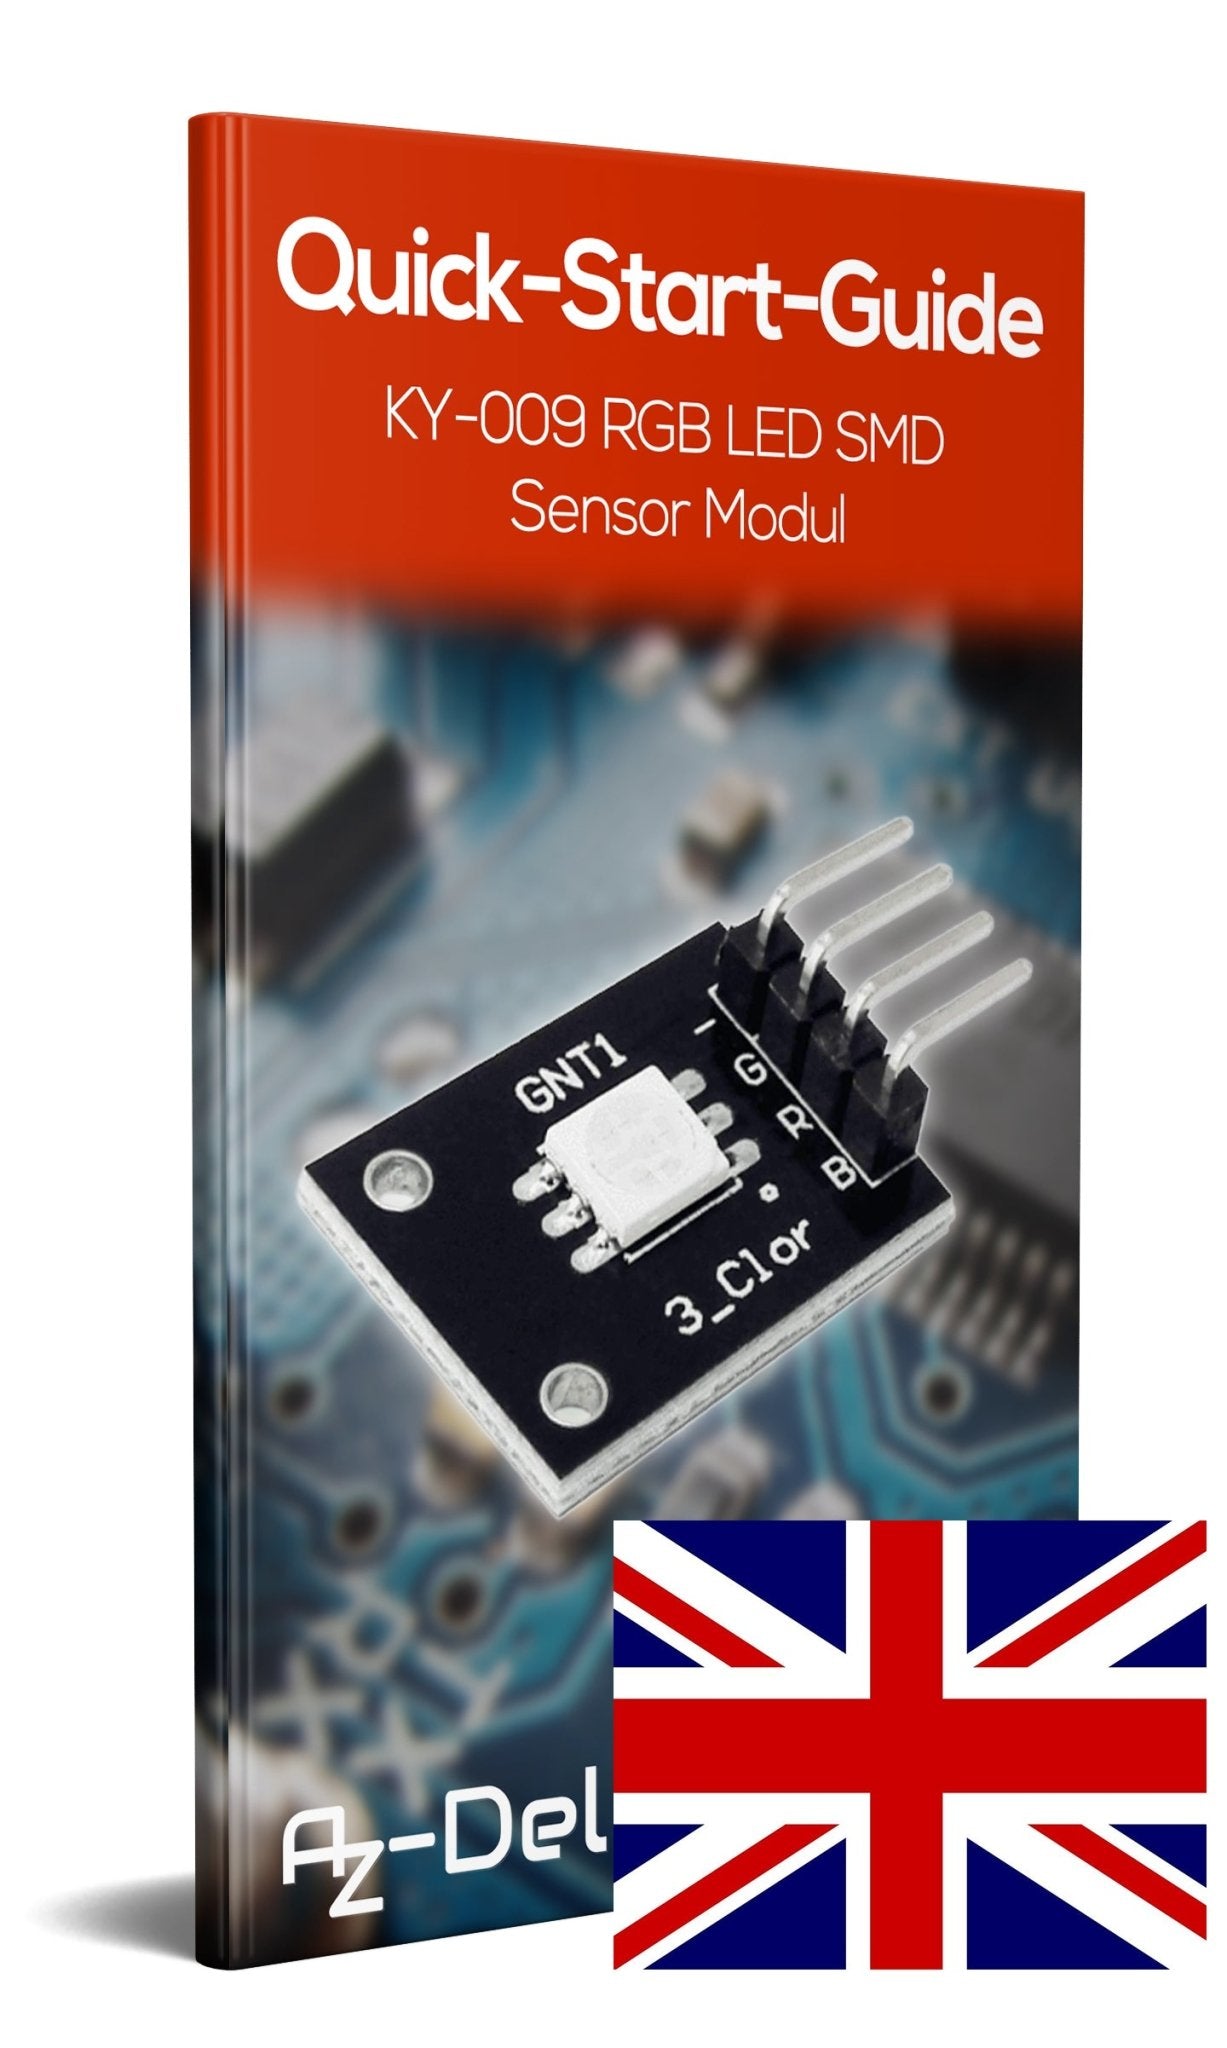 KY-009 RGB LED SMD Modul Sensor - AZ-Delivery